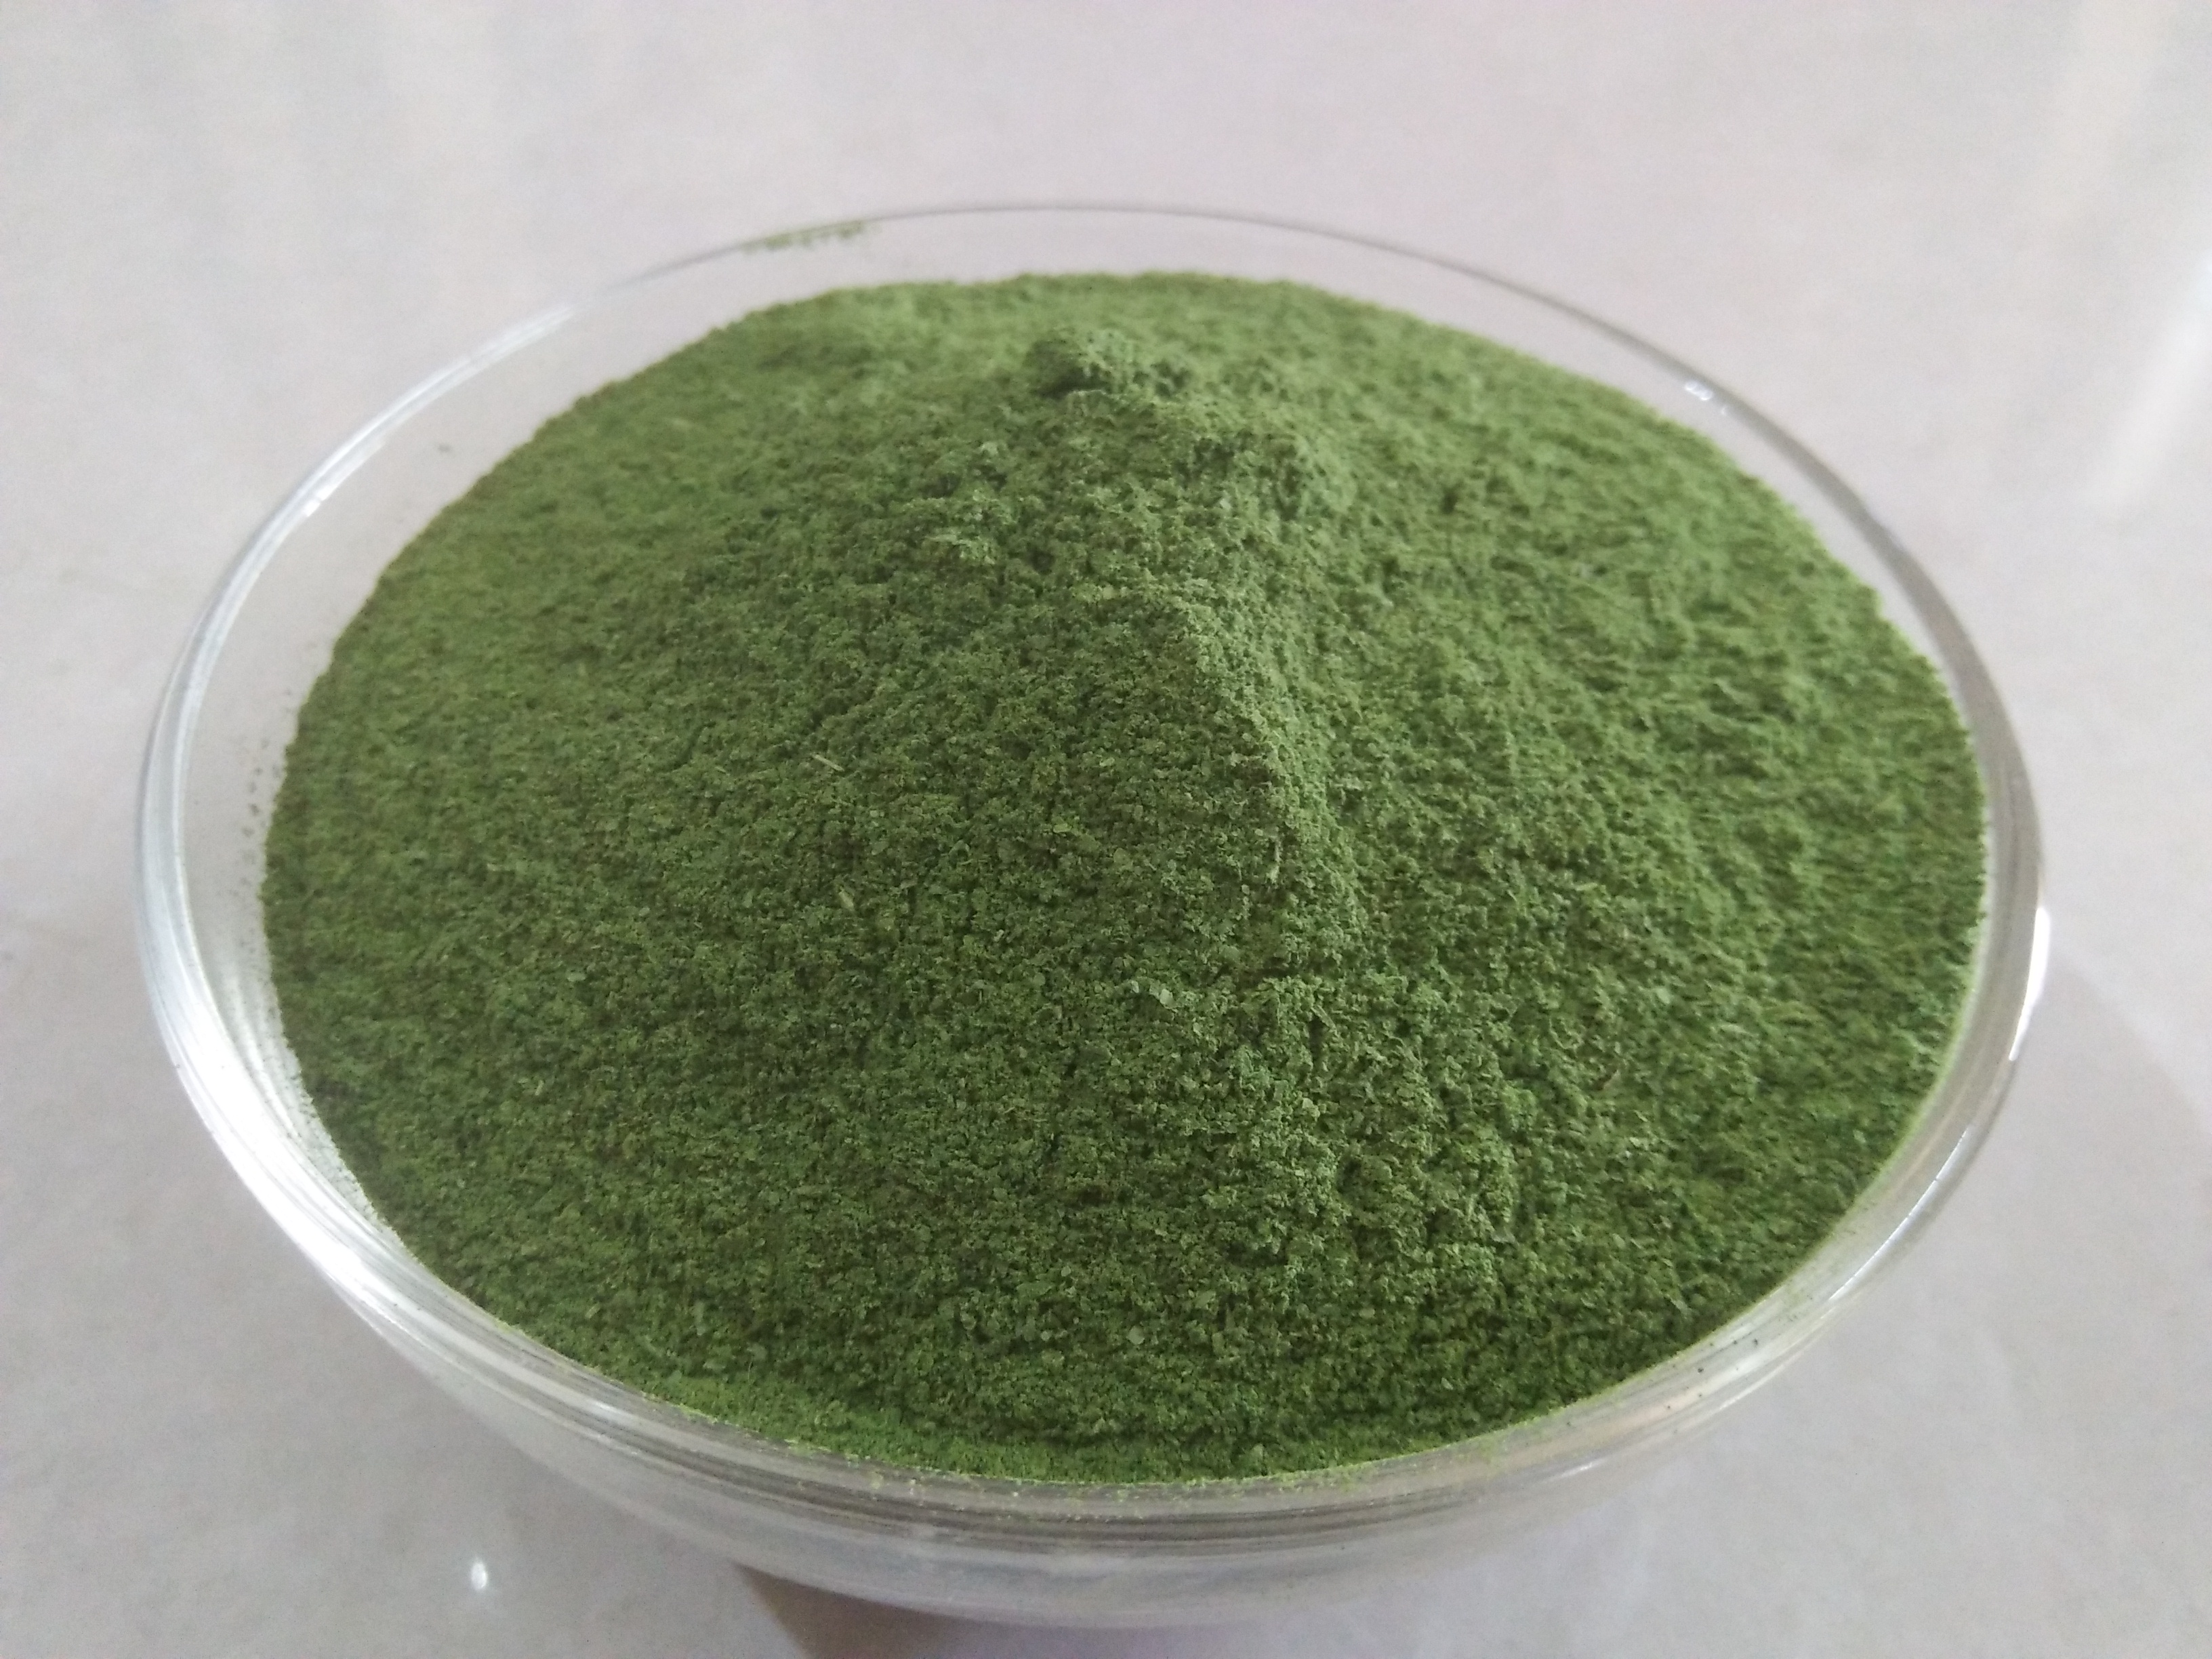 Moringa Products - Solar Dried Leaves, Tea Cut, Powder, Oil Etc., In Bulk Supply.